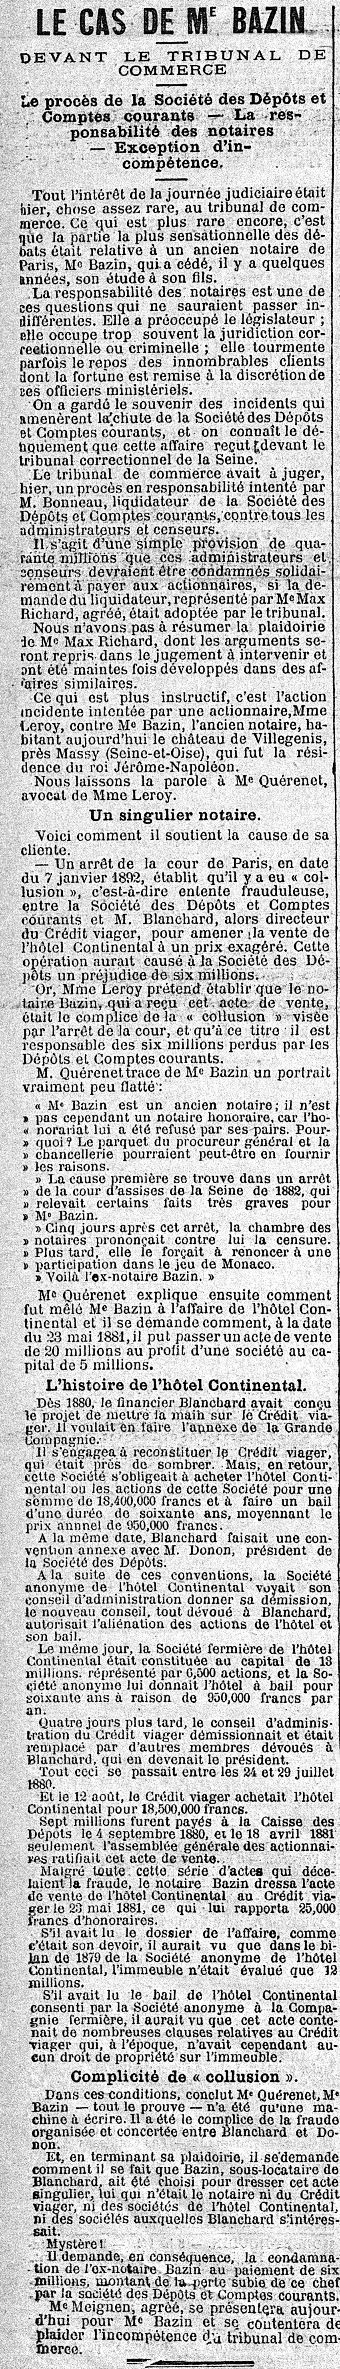 Article Le Matin 21 novembre 1893